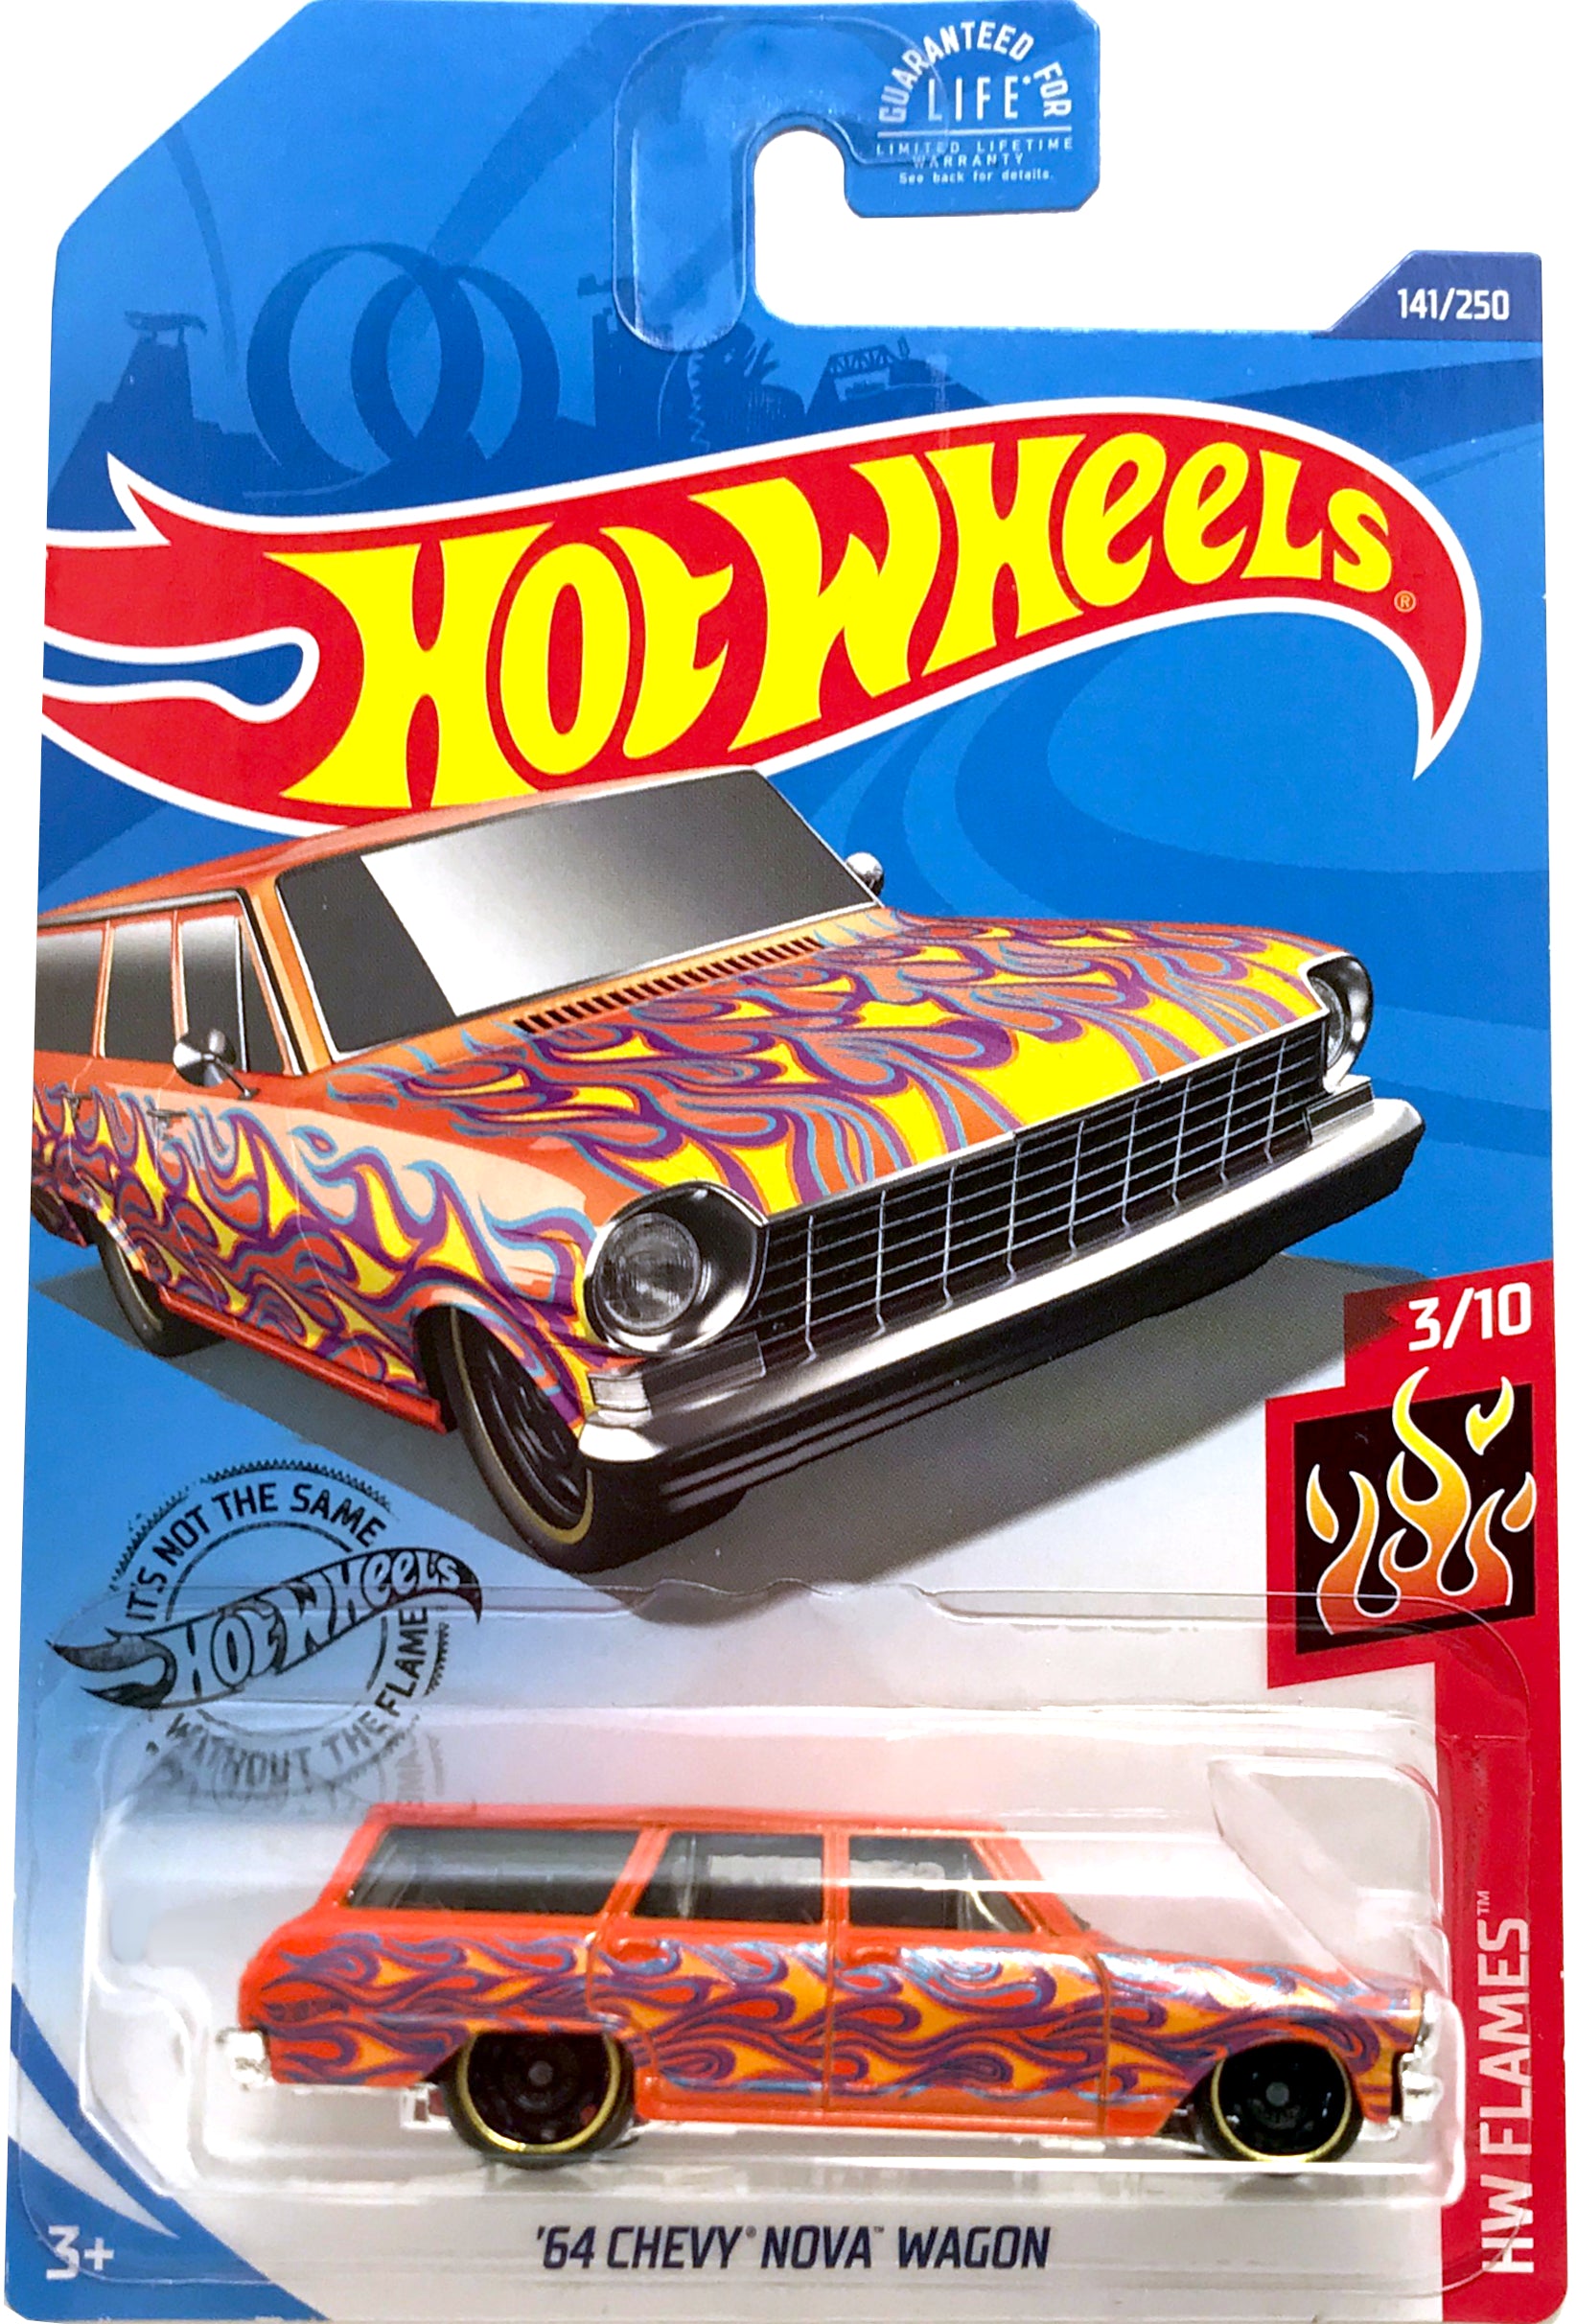 2020 Hot Wheels Mainline #141 - '64 Chevy Nova Wagon (Orange) GHD61